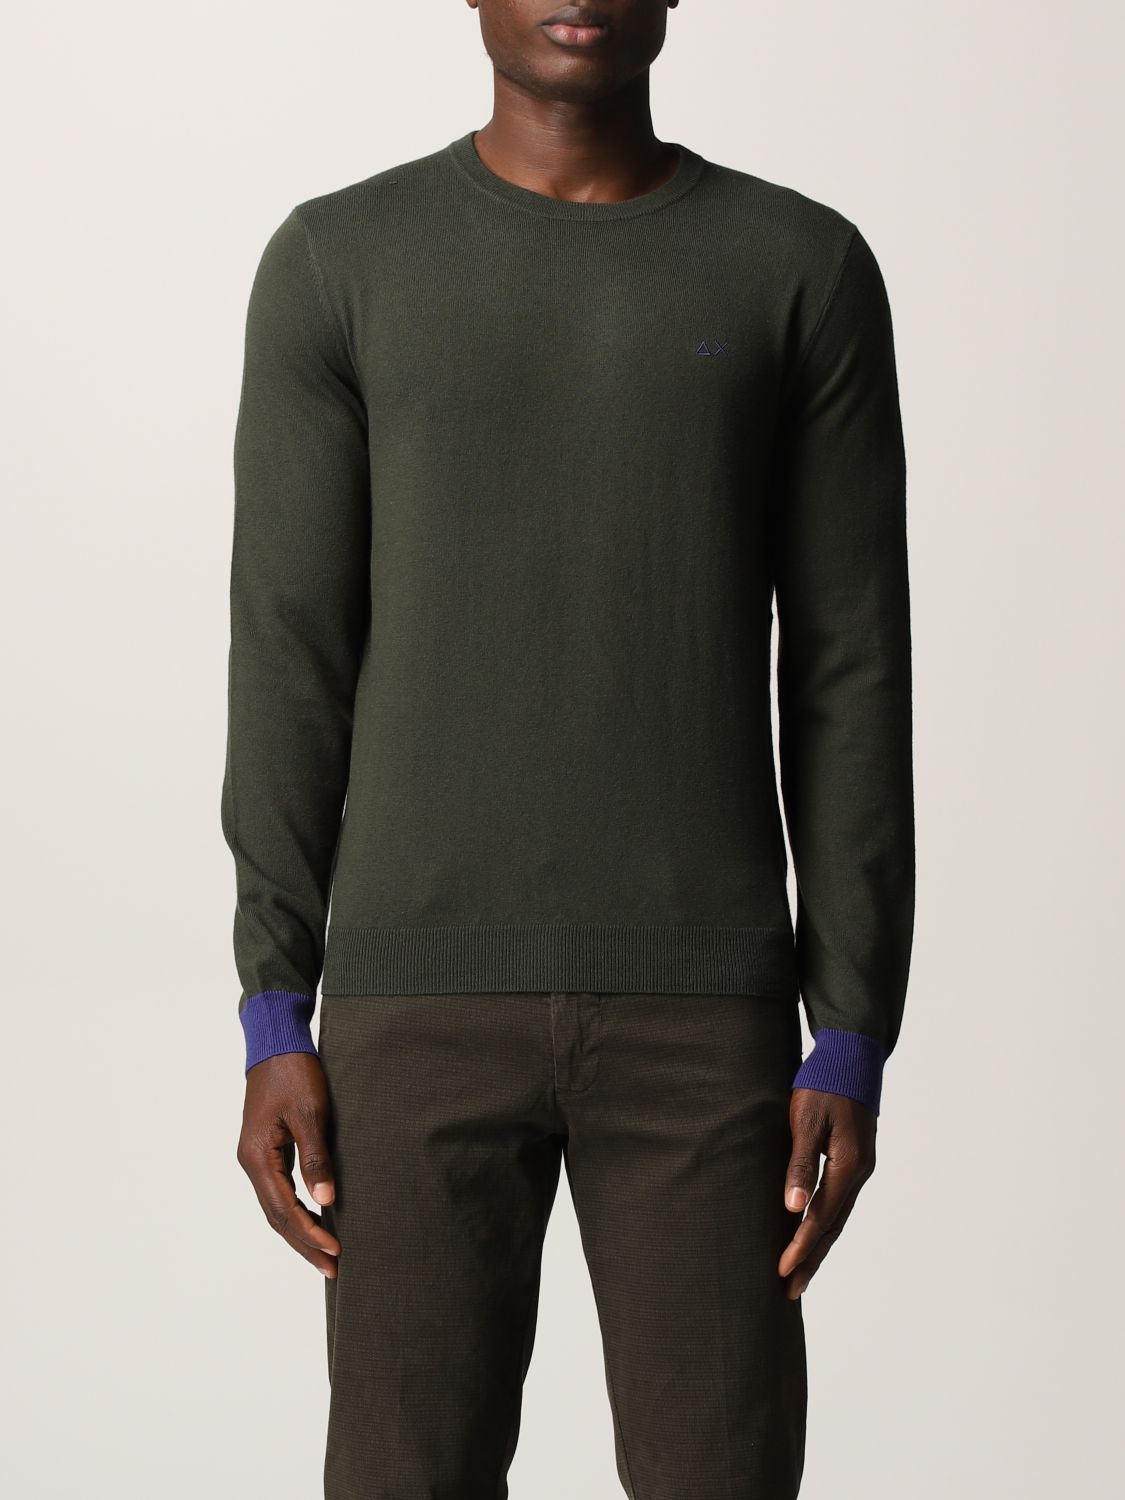 SUN 68: sweater for man - Green | Sun 68 sweater K41110 online at